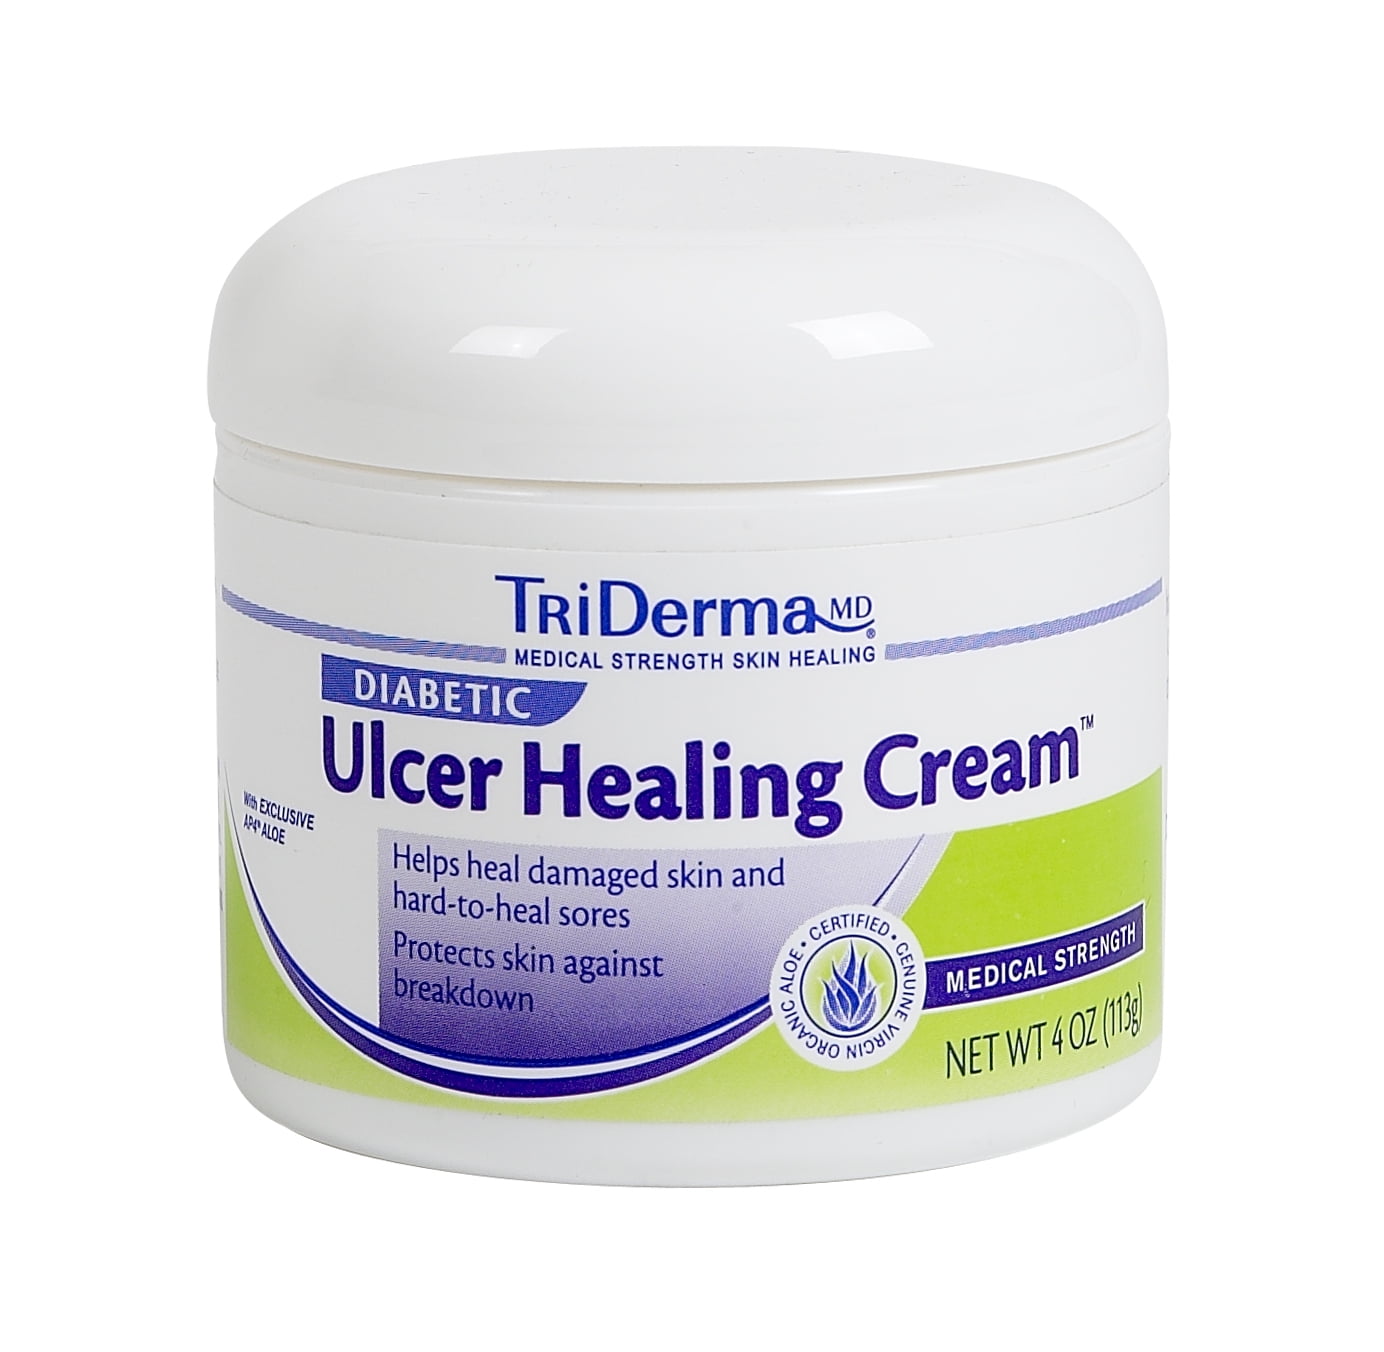 TriDerma Pressure Sore Relief Healing Cream Pack of (4) 4 Ounce Jars